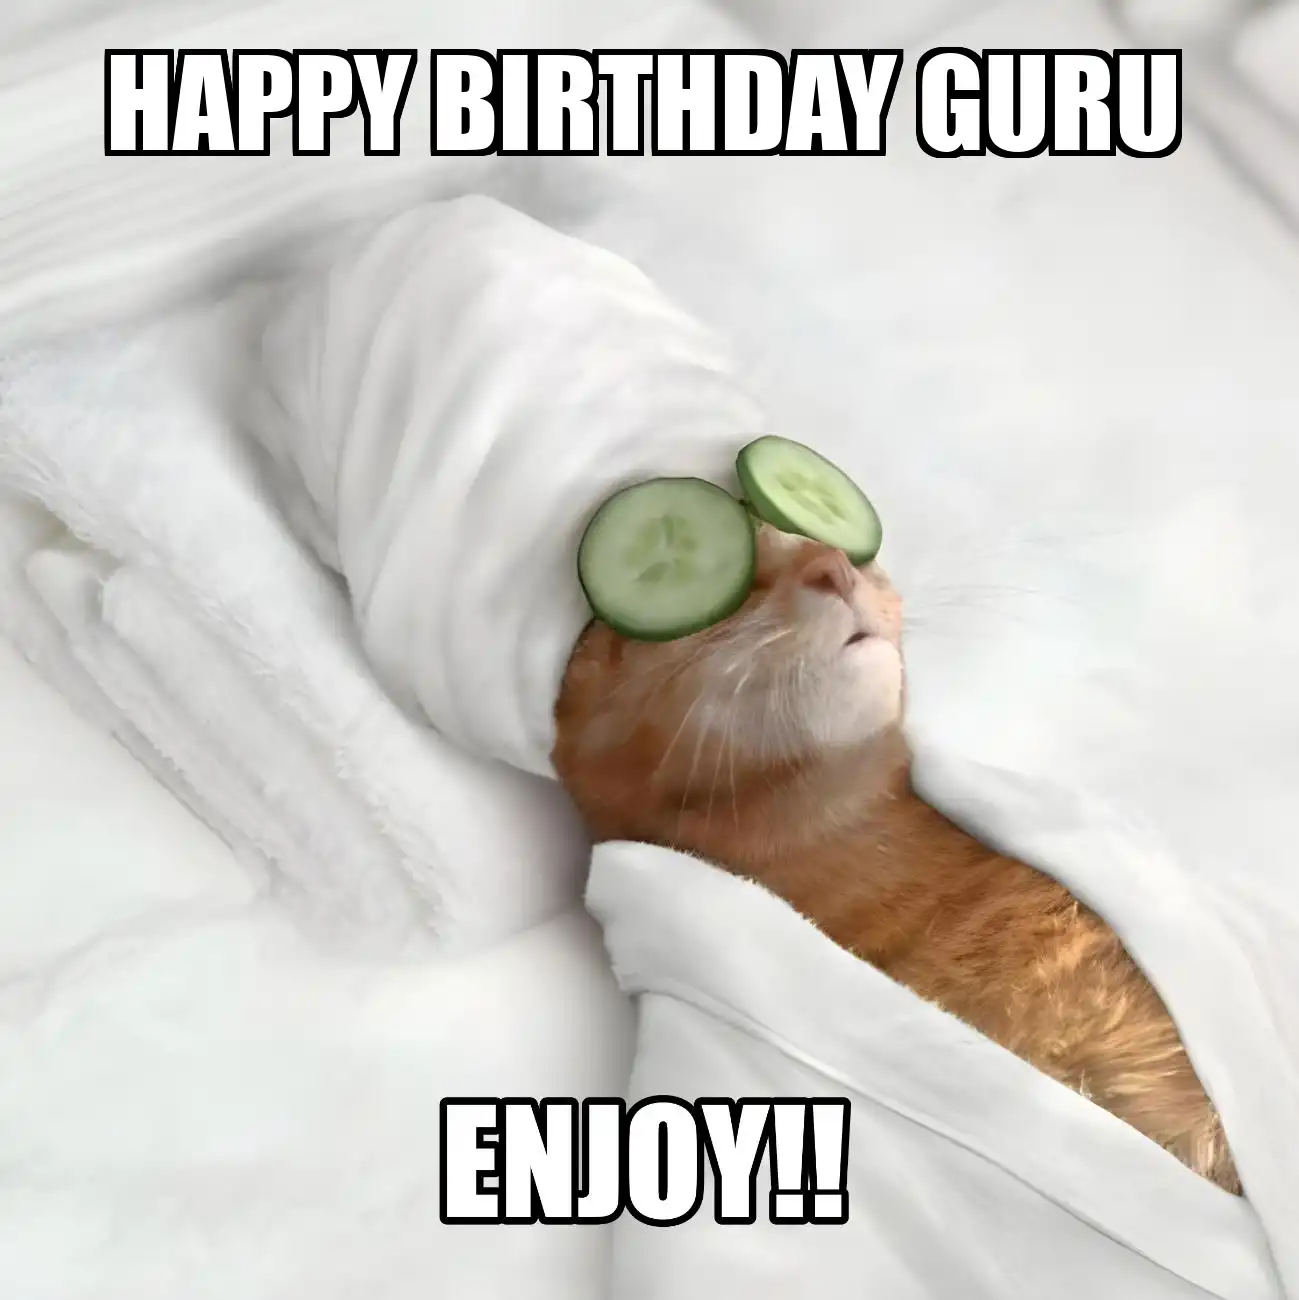 Happy Birthday Guru Enjoy Cat Meme